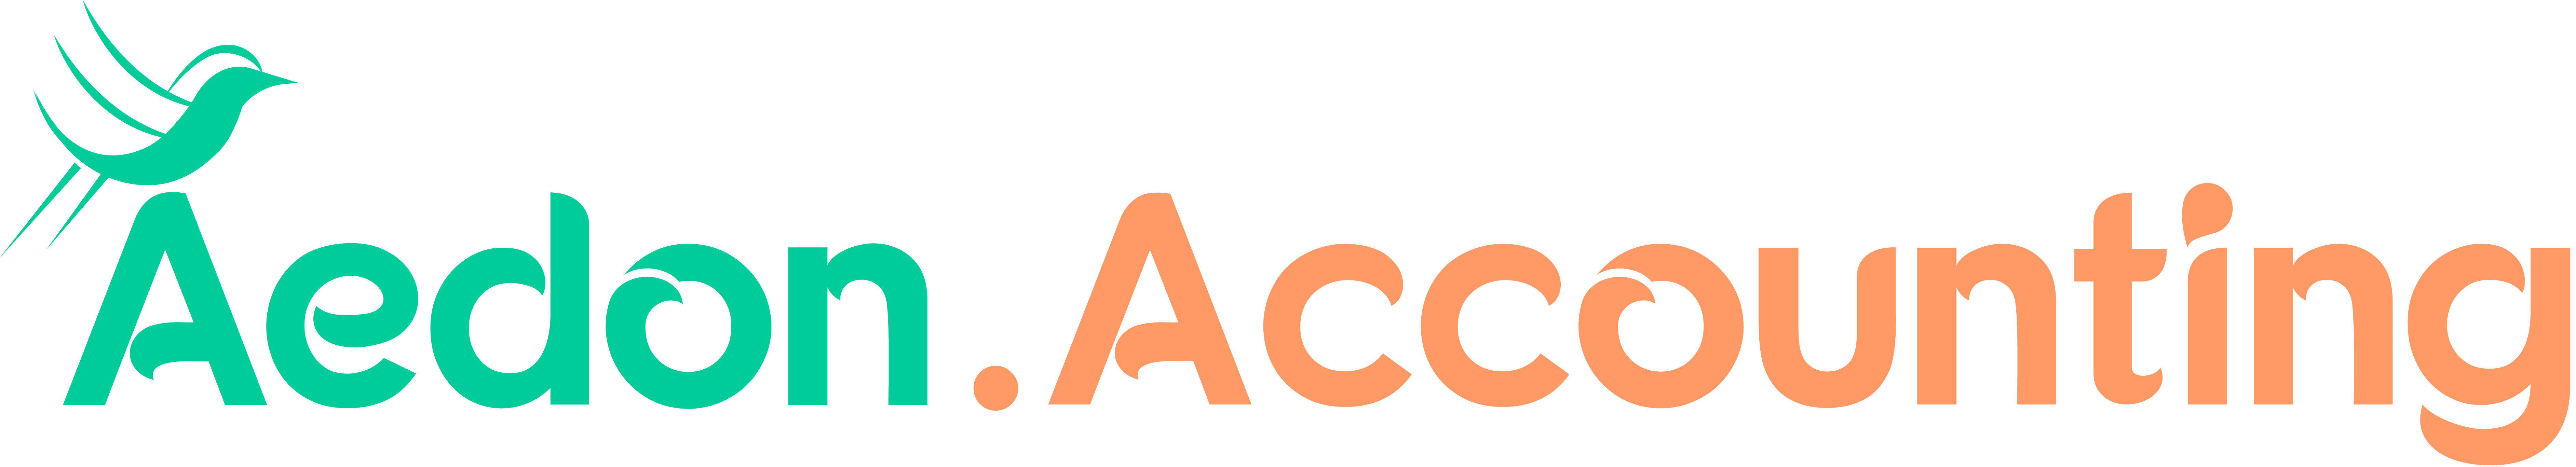 Aedon Accounting logo